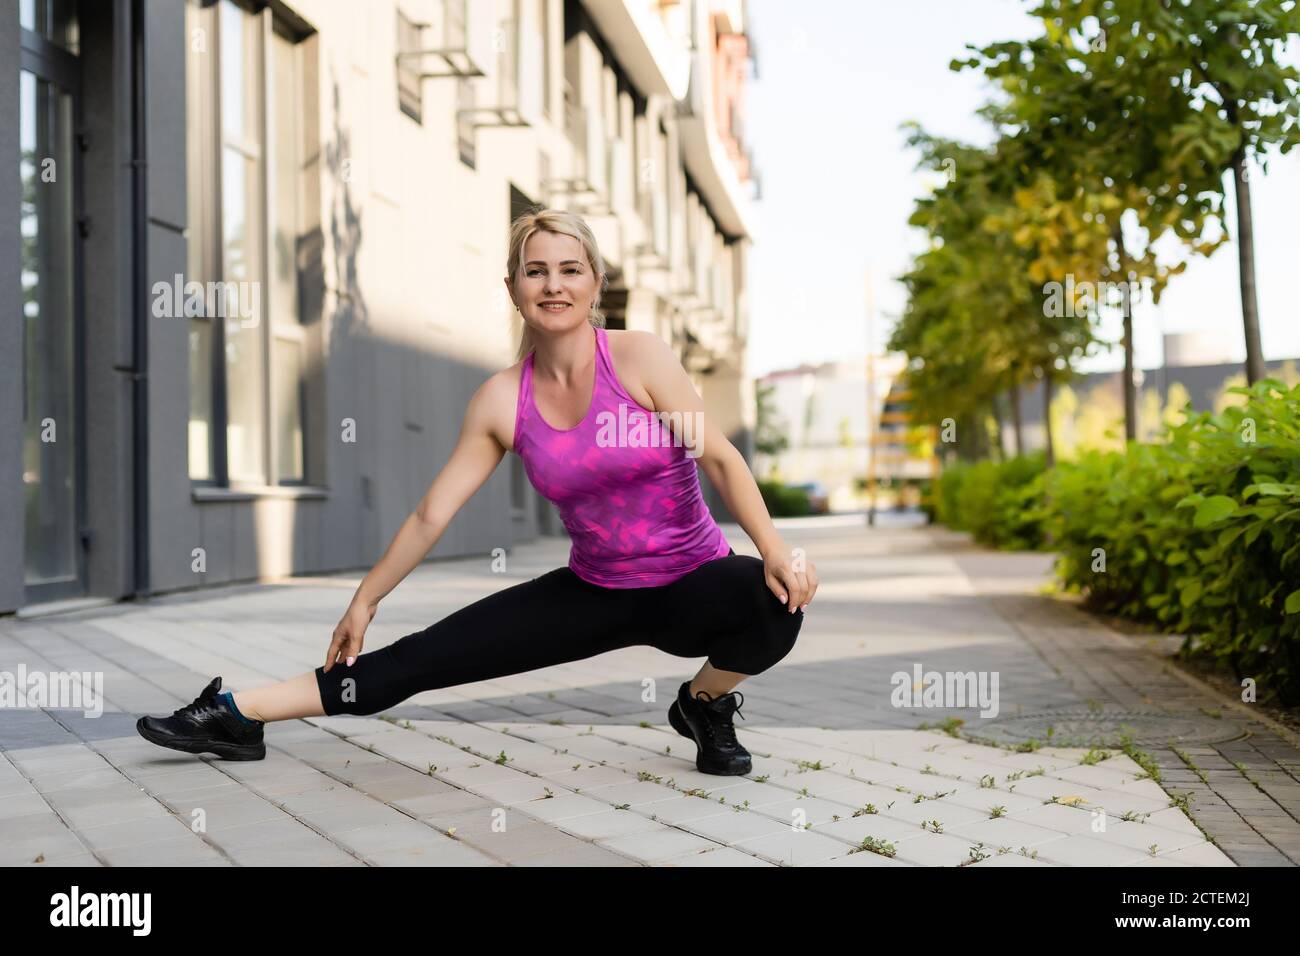 Deporte mujer de fitness de moda ropa deportiva hacer yoga